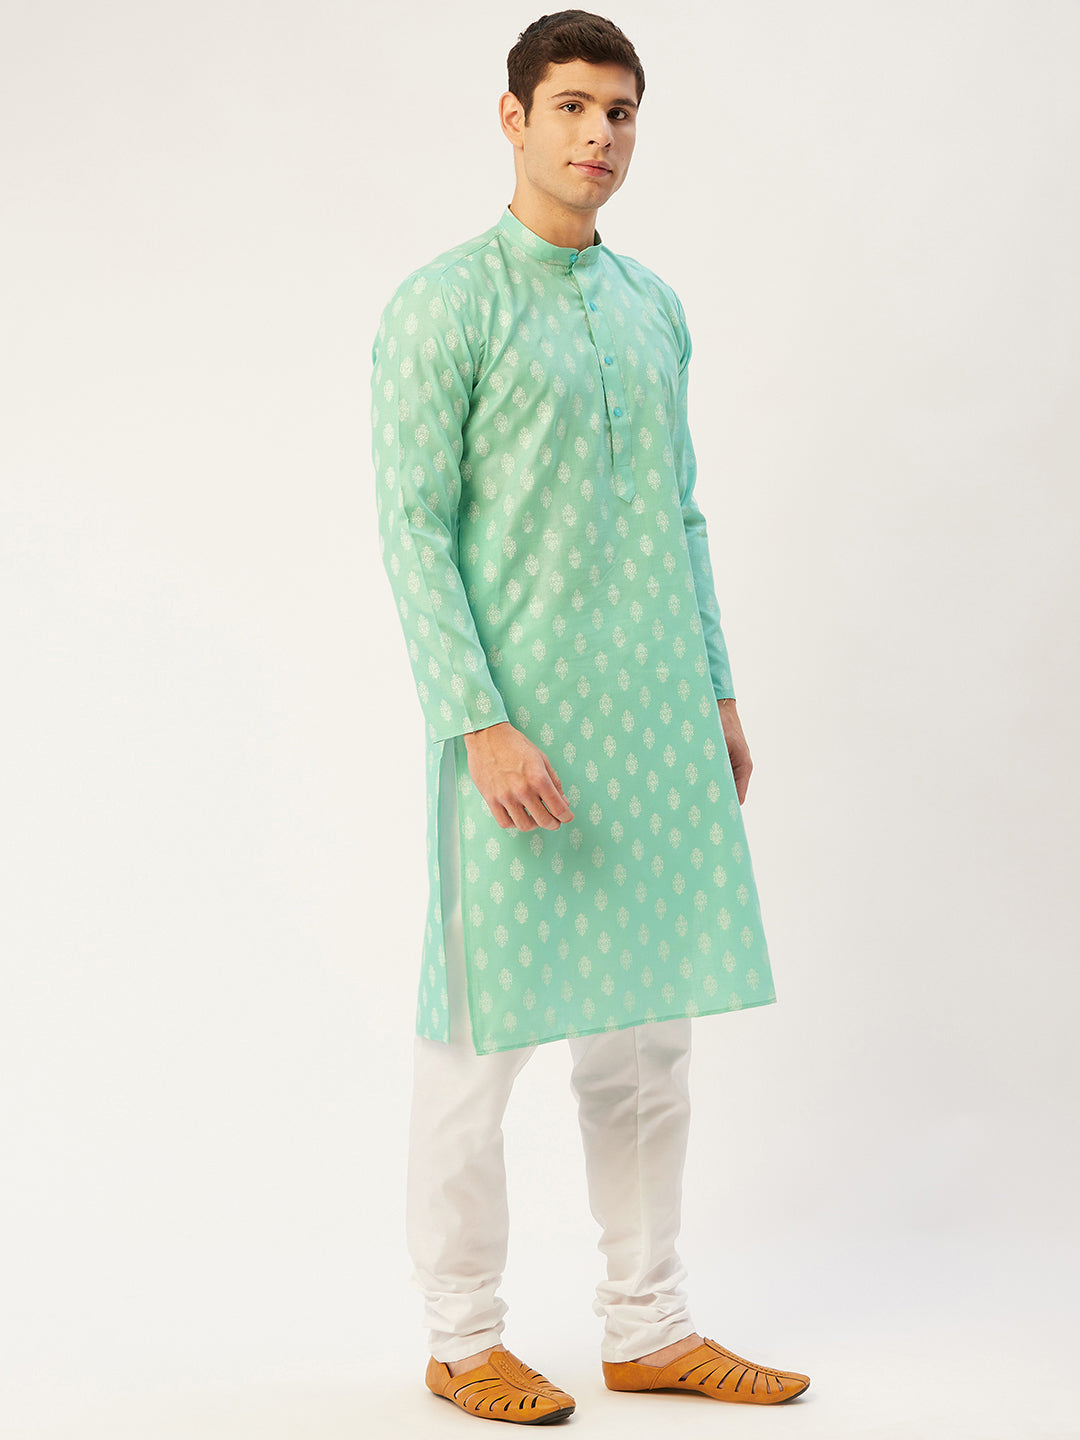 Jompers Men's Green Cotton Floral Printed kurta Pyjama Set